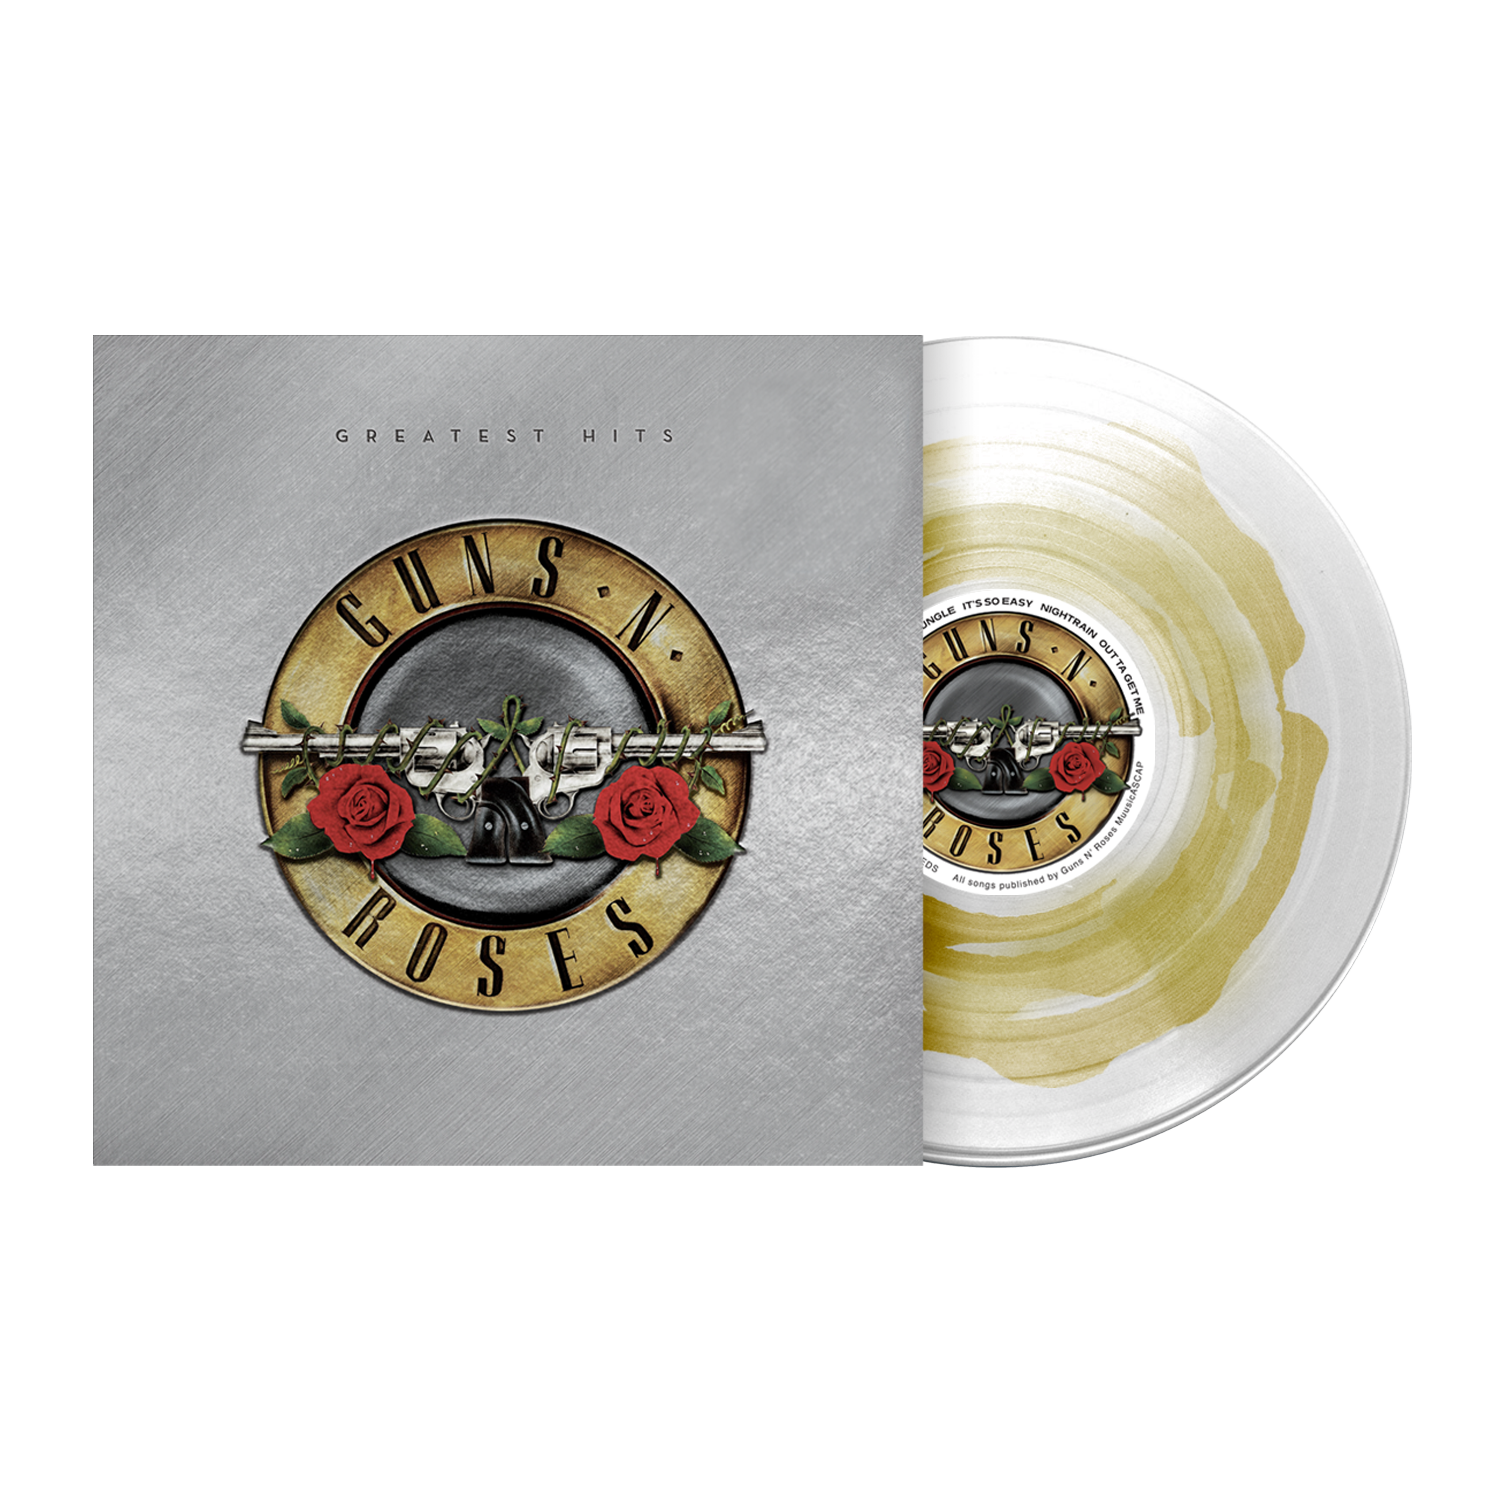 Guns N' Roses - Greatest Hits - Vinilo (Edición Limitada Color